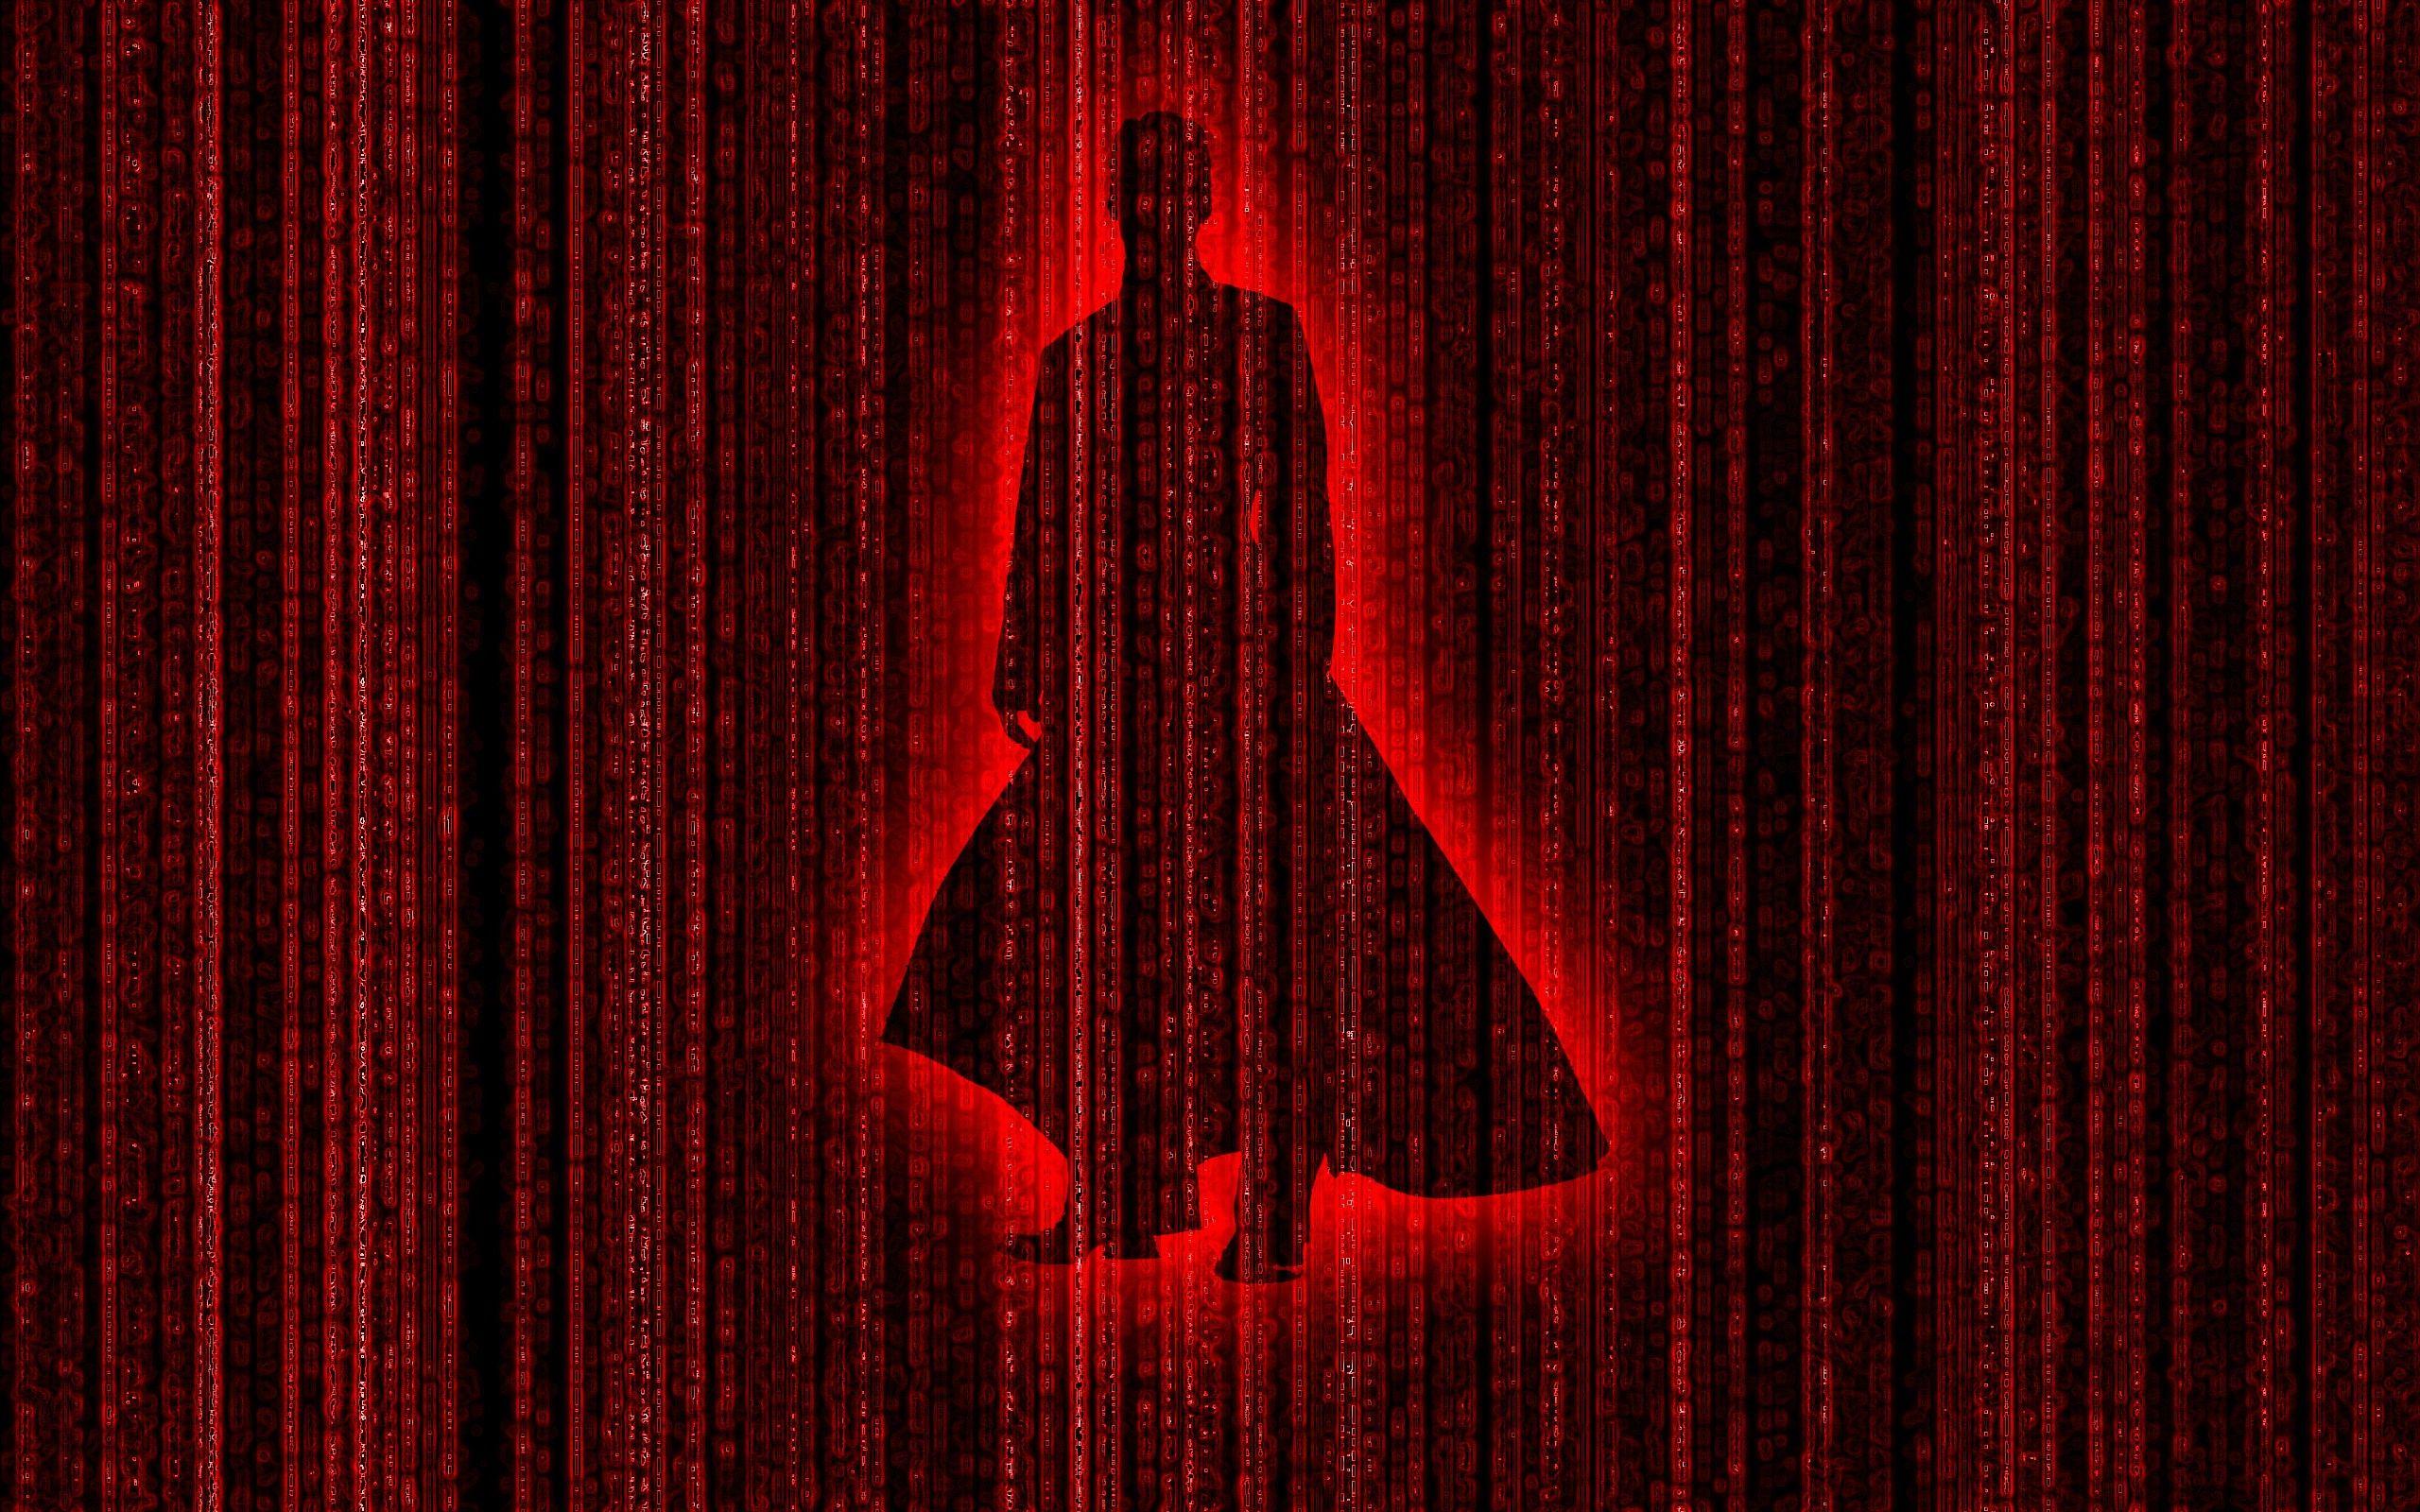 Red Black backgroundDownload free beautiful full HD wallpaper